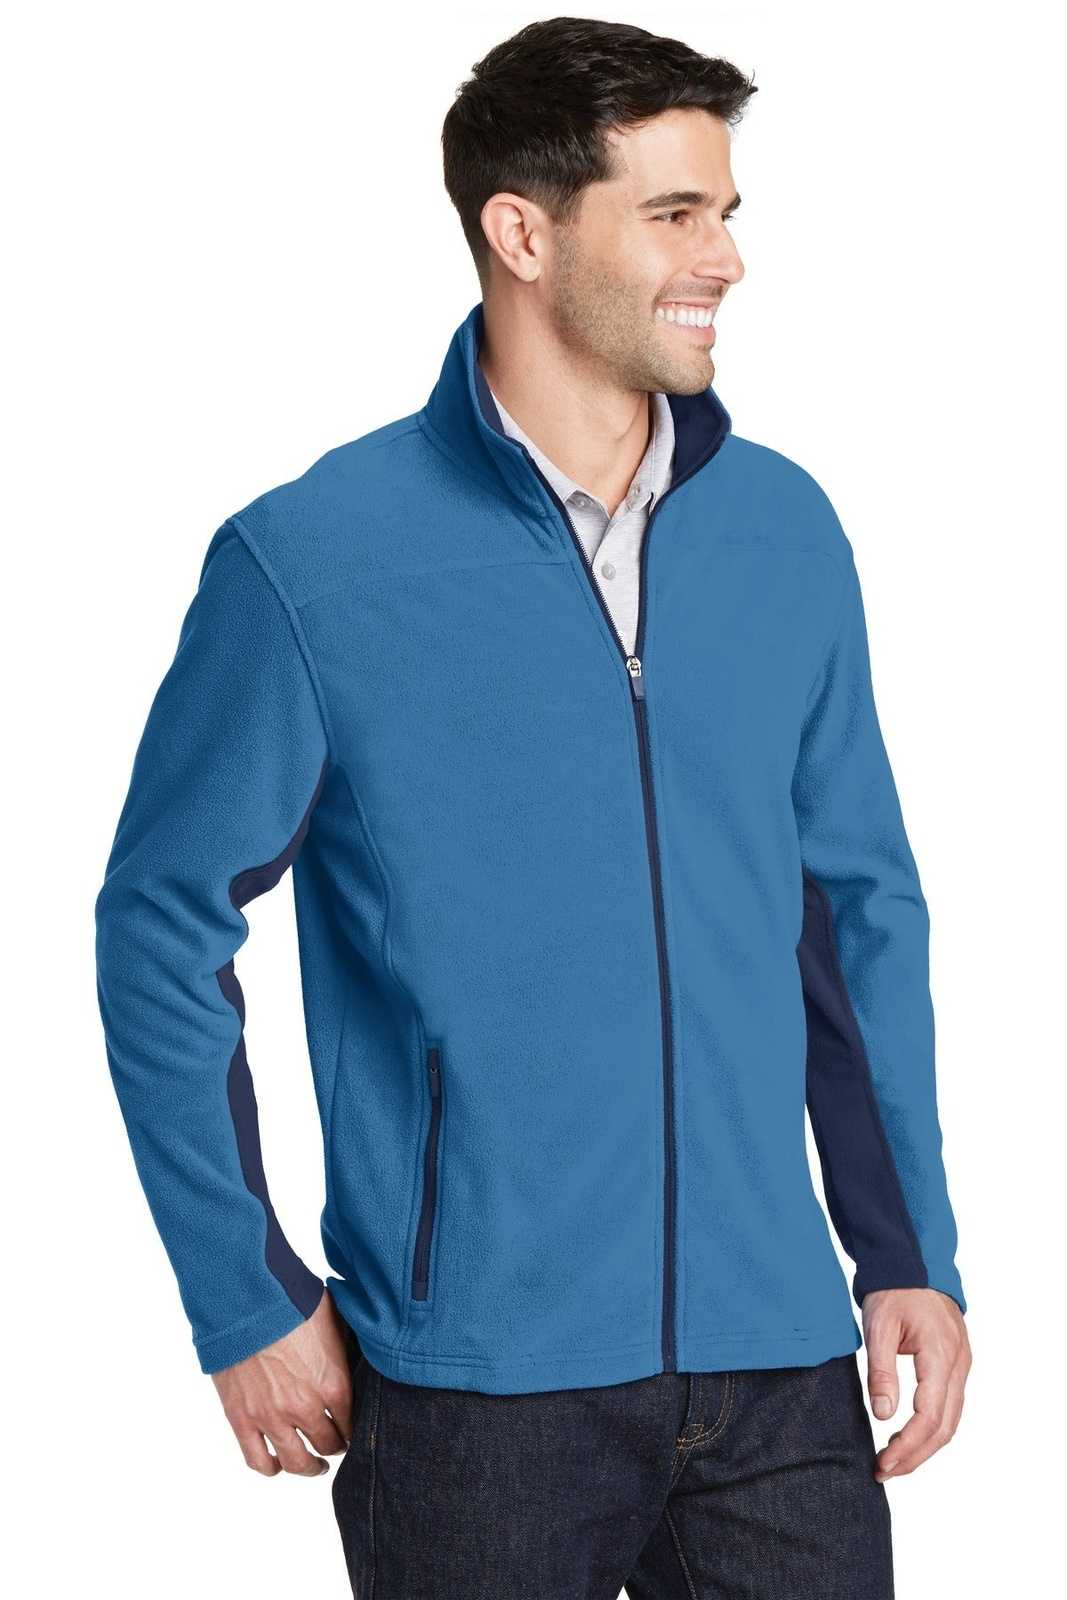 Port Authority F233 Summit Fleece Full-Zip Jacket - Regal Blue Dress Blue Navy - HIT a Double - 4